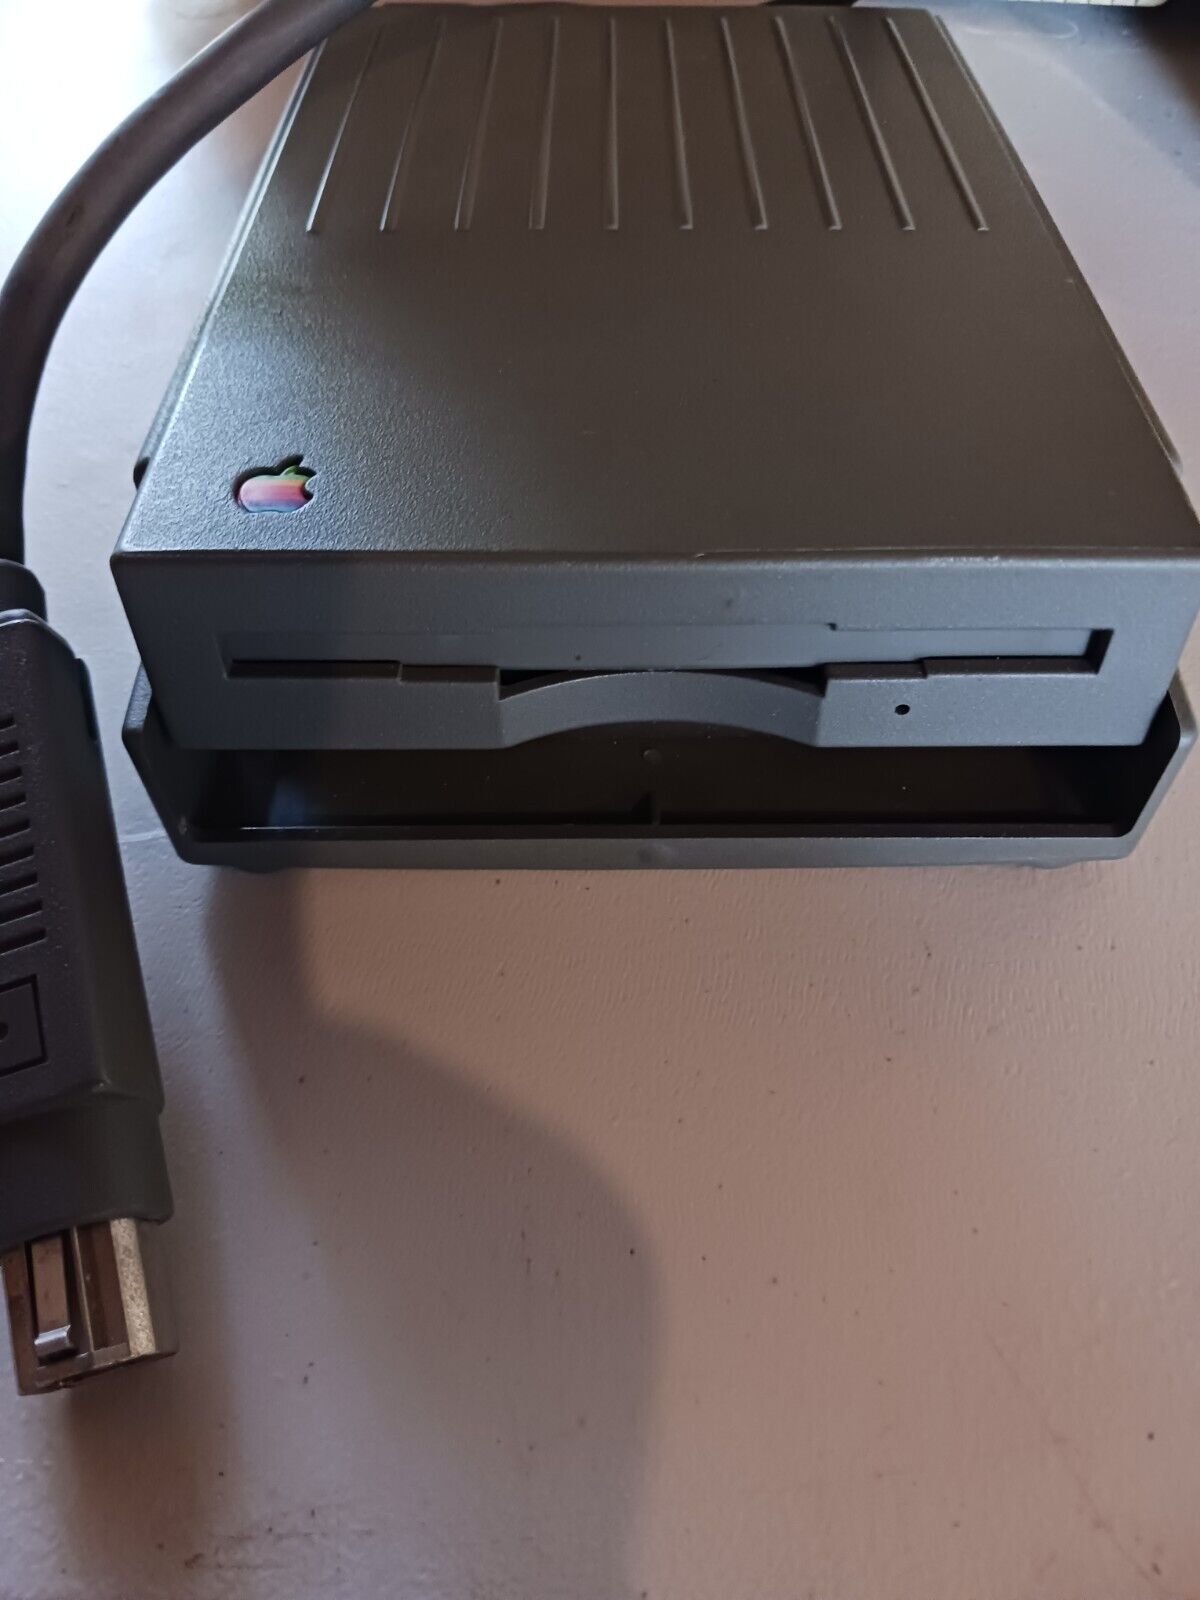 Macintosh HDI-20 External 1.4MB Floppy Disk Drive